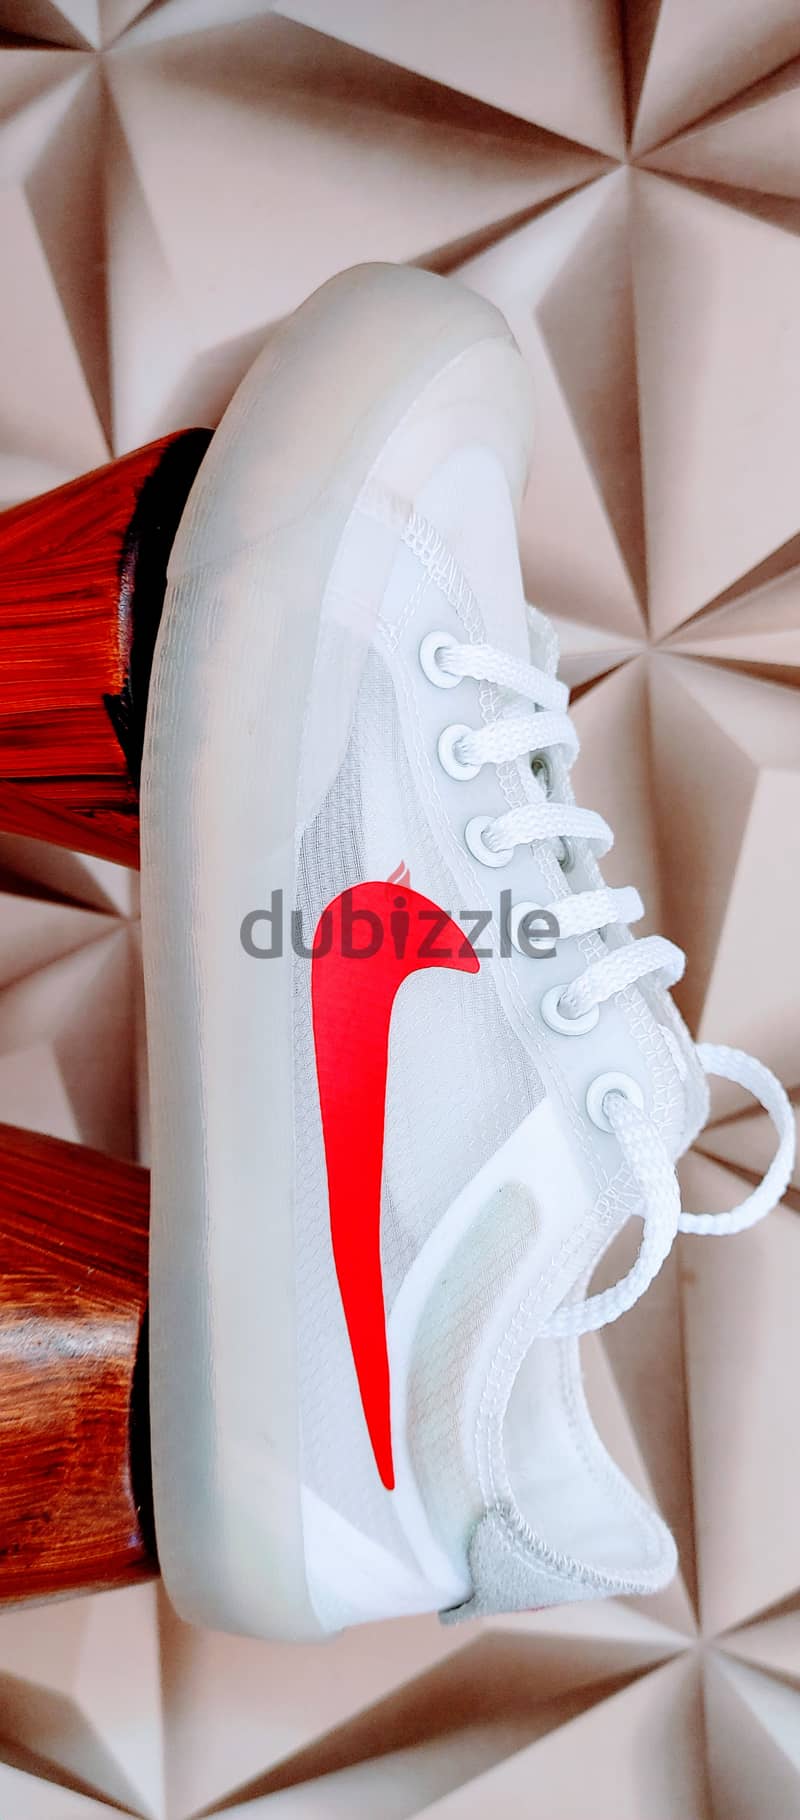 Nike shoes mesh transparent size 37شفاف نايك حريمي مقاس 4